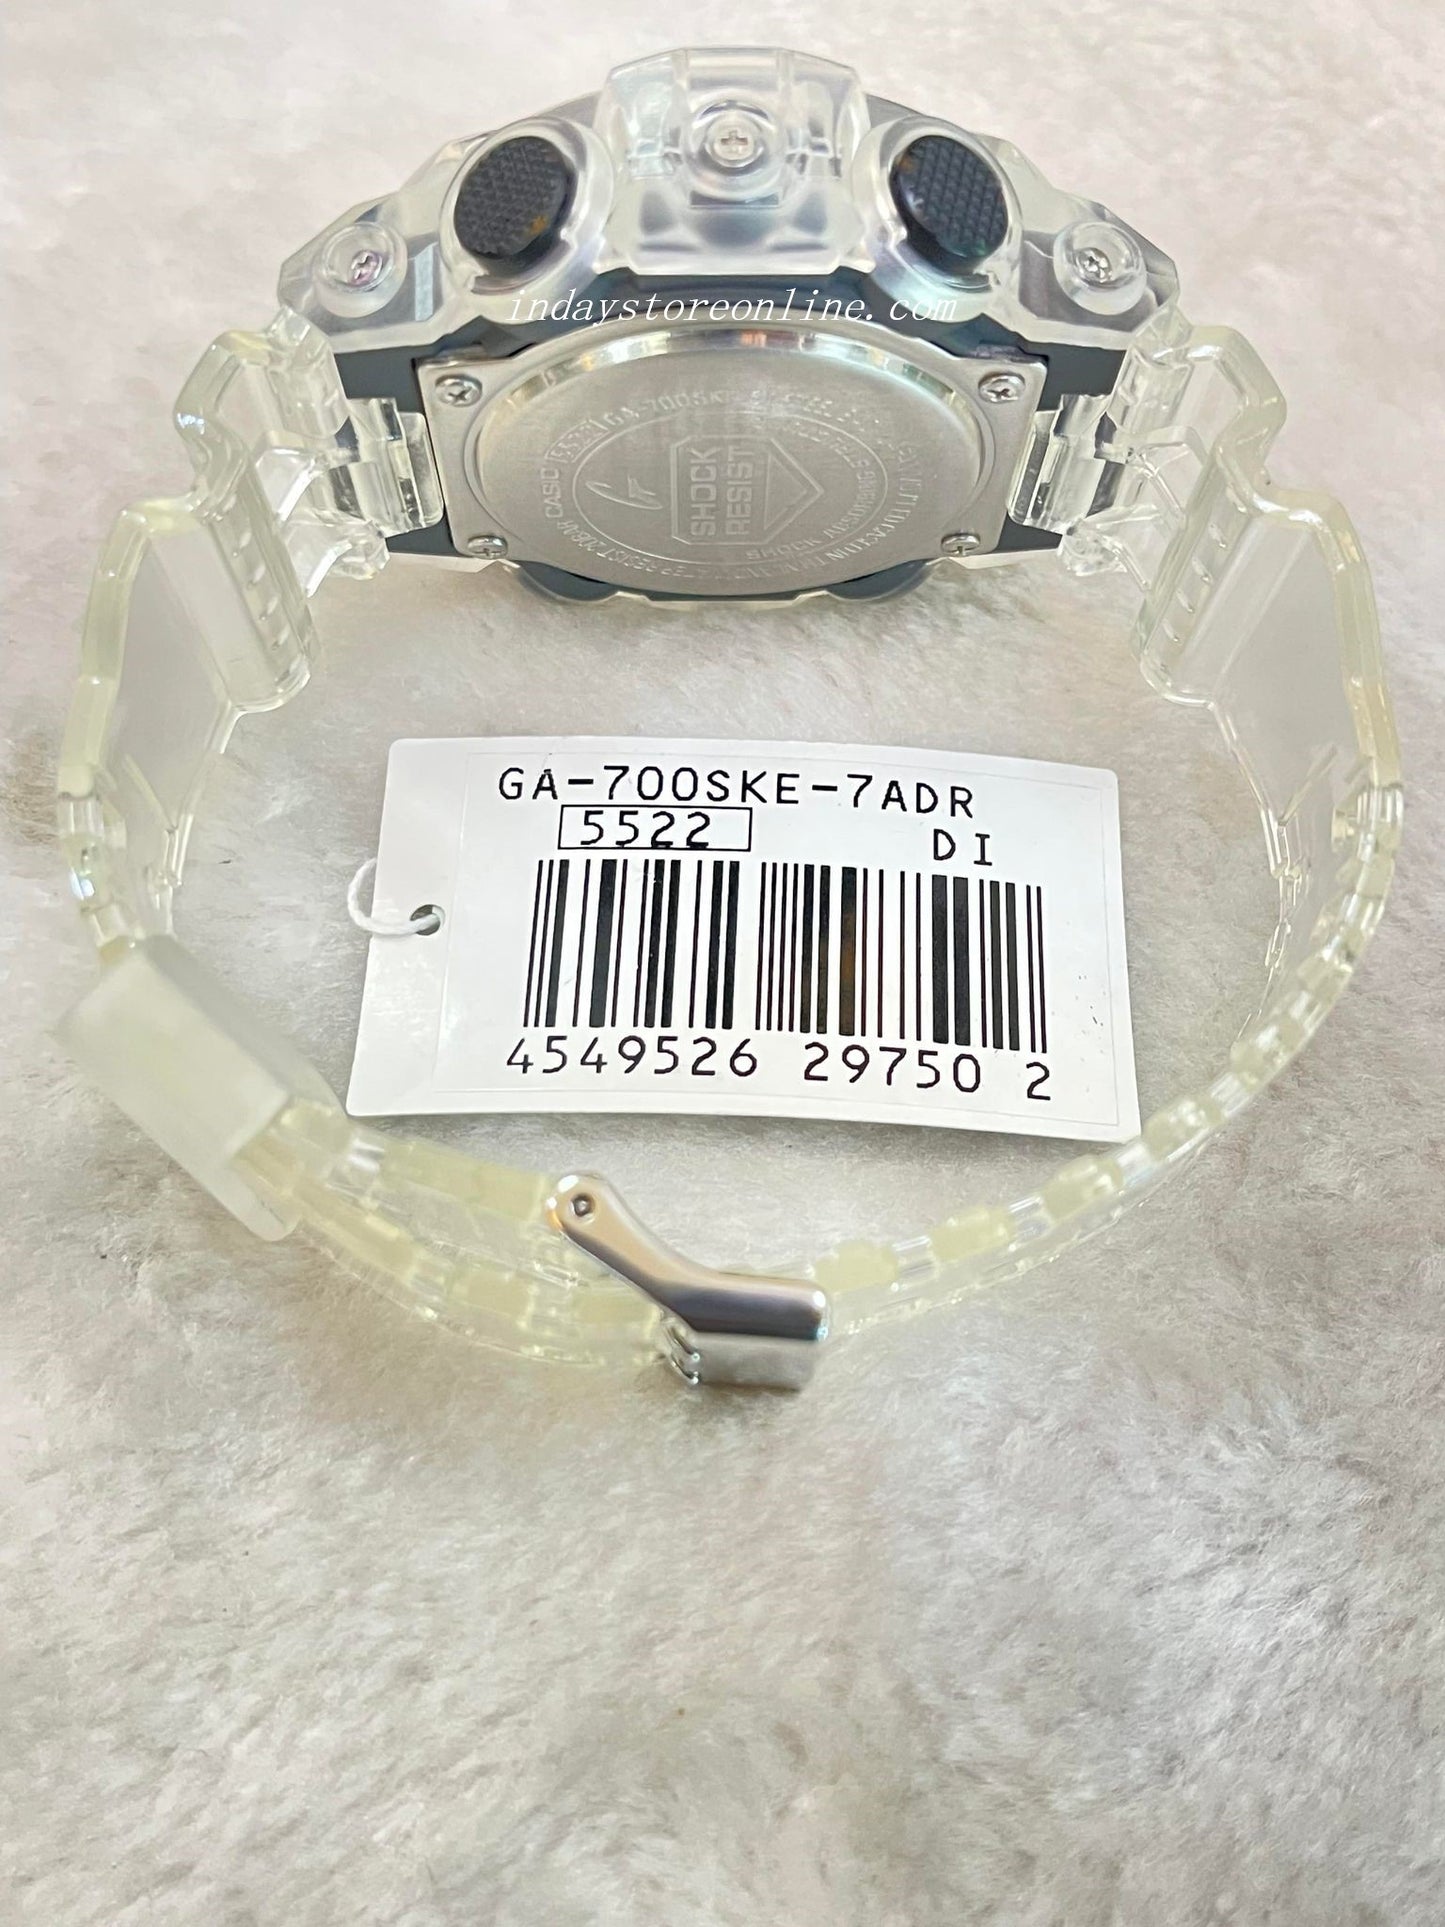 Casio G-Shock Men's Watch GA-700SKE-7A Analog-Digital GA-700 Series Sporty Design Transparent Color